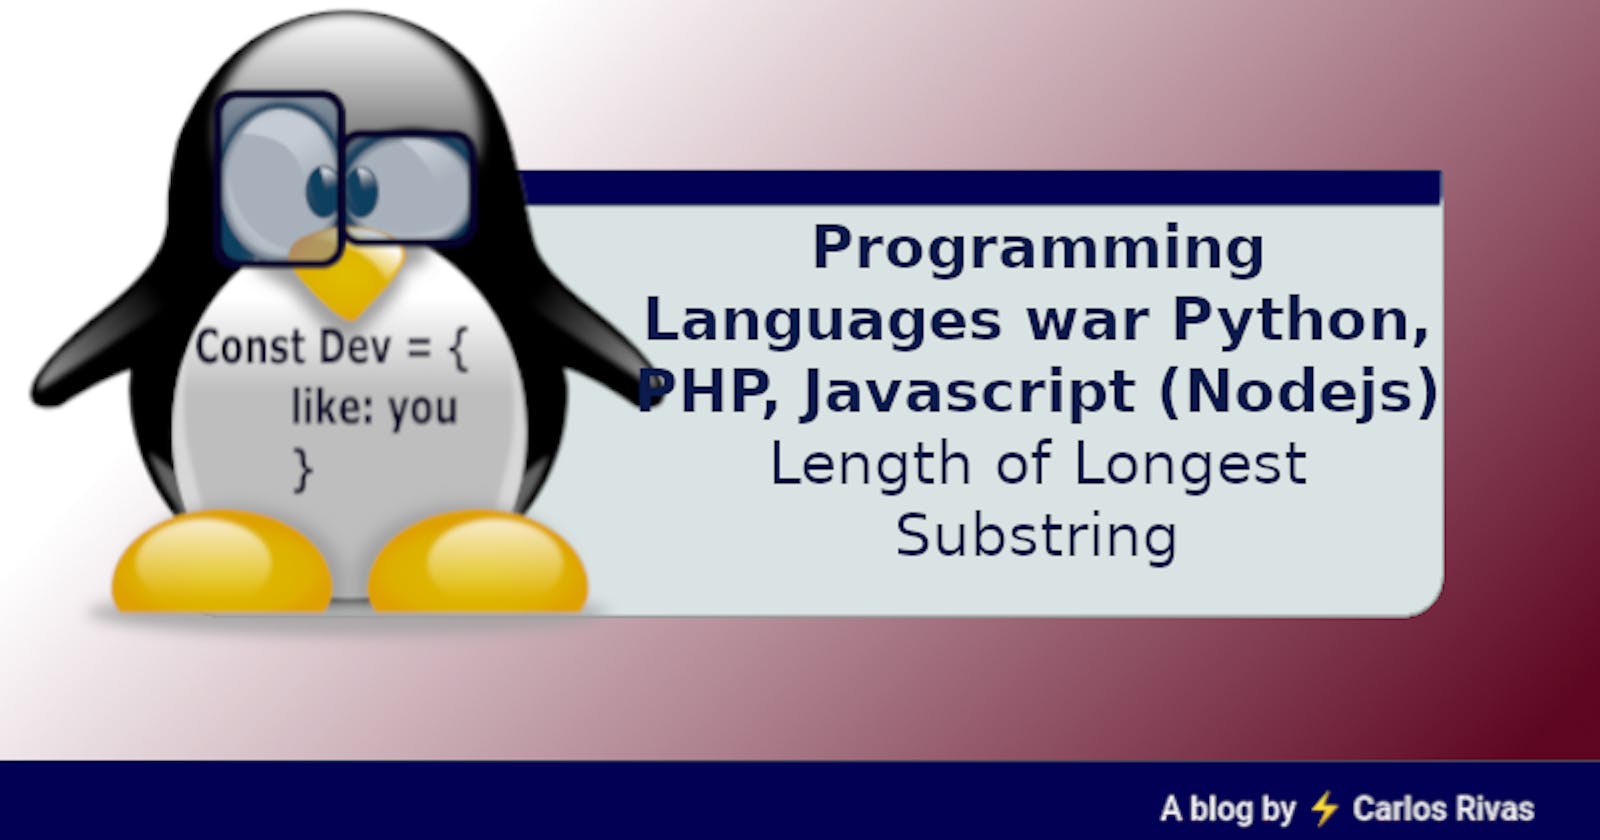 Programming Languages war
Python, PHP, Javascript (Nodejs)
Length of Longest Substring